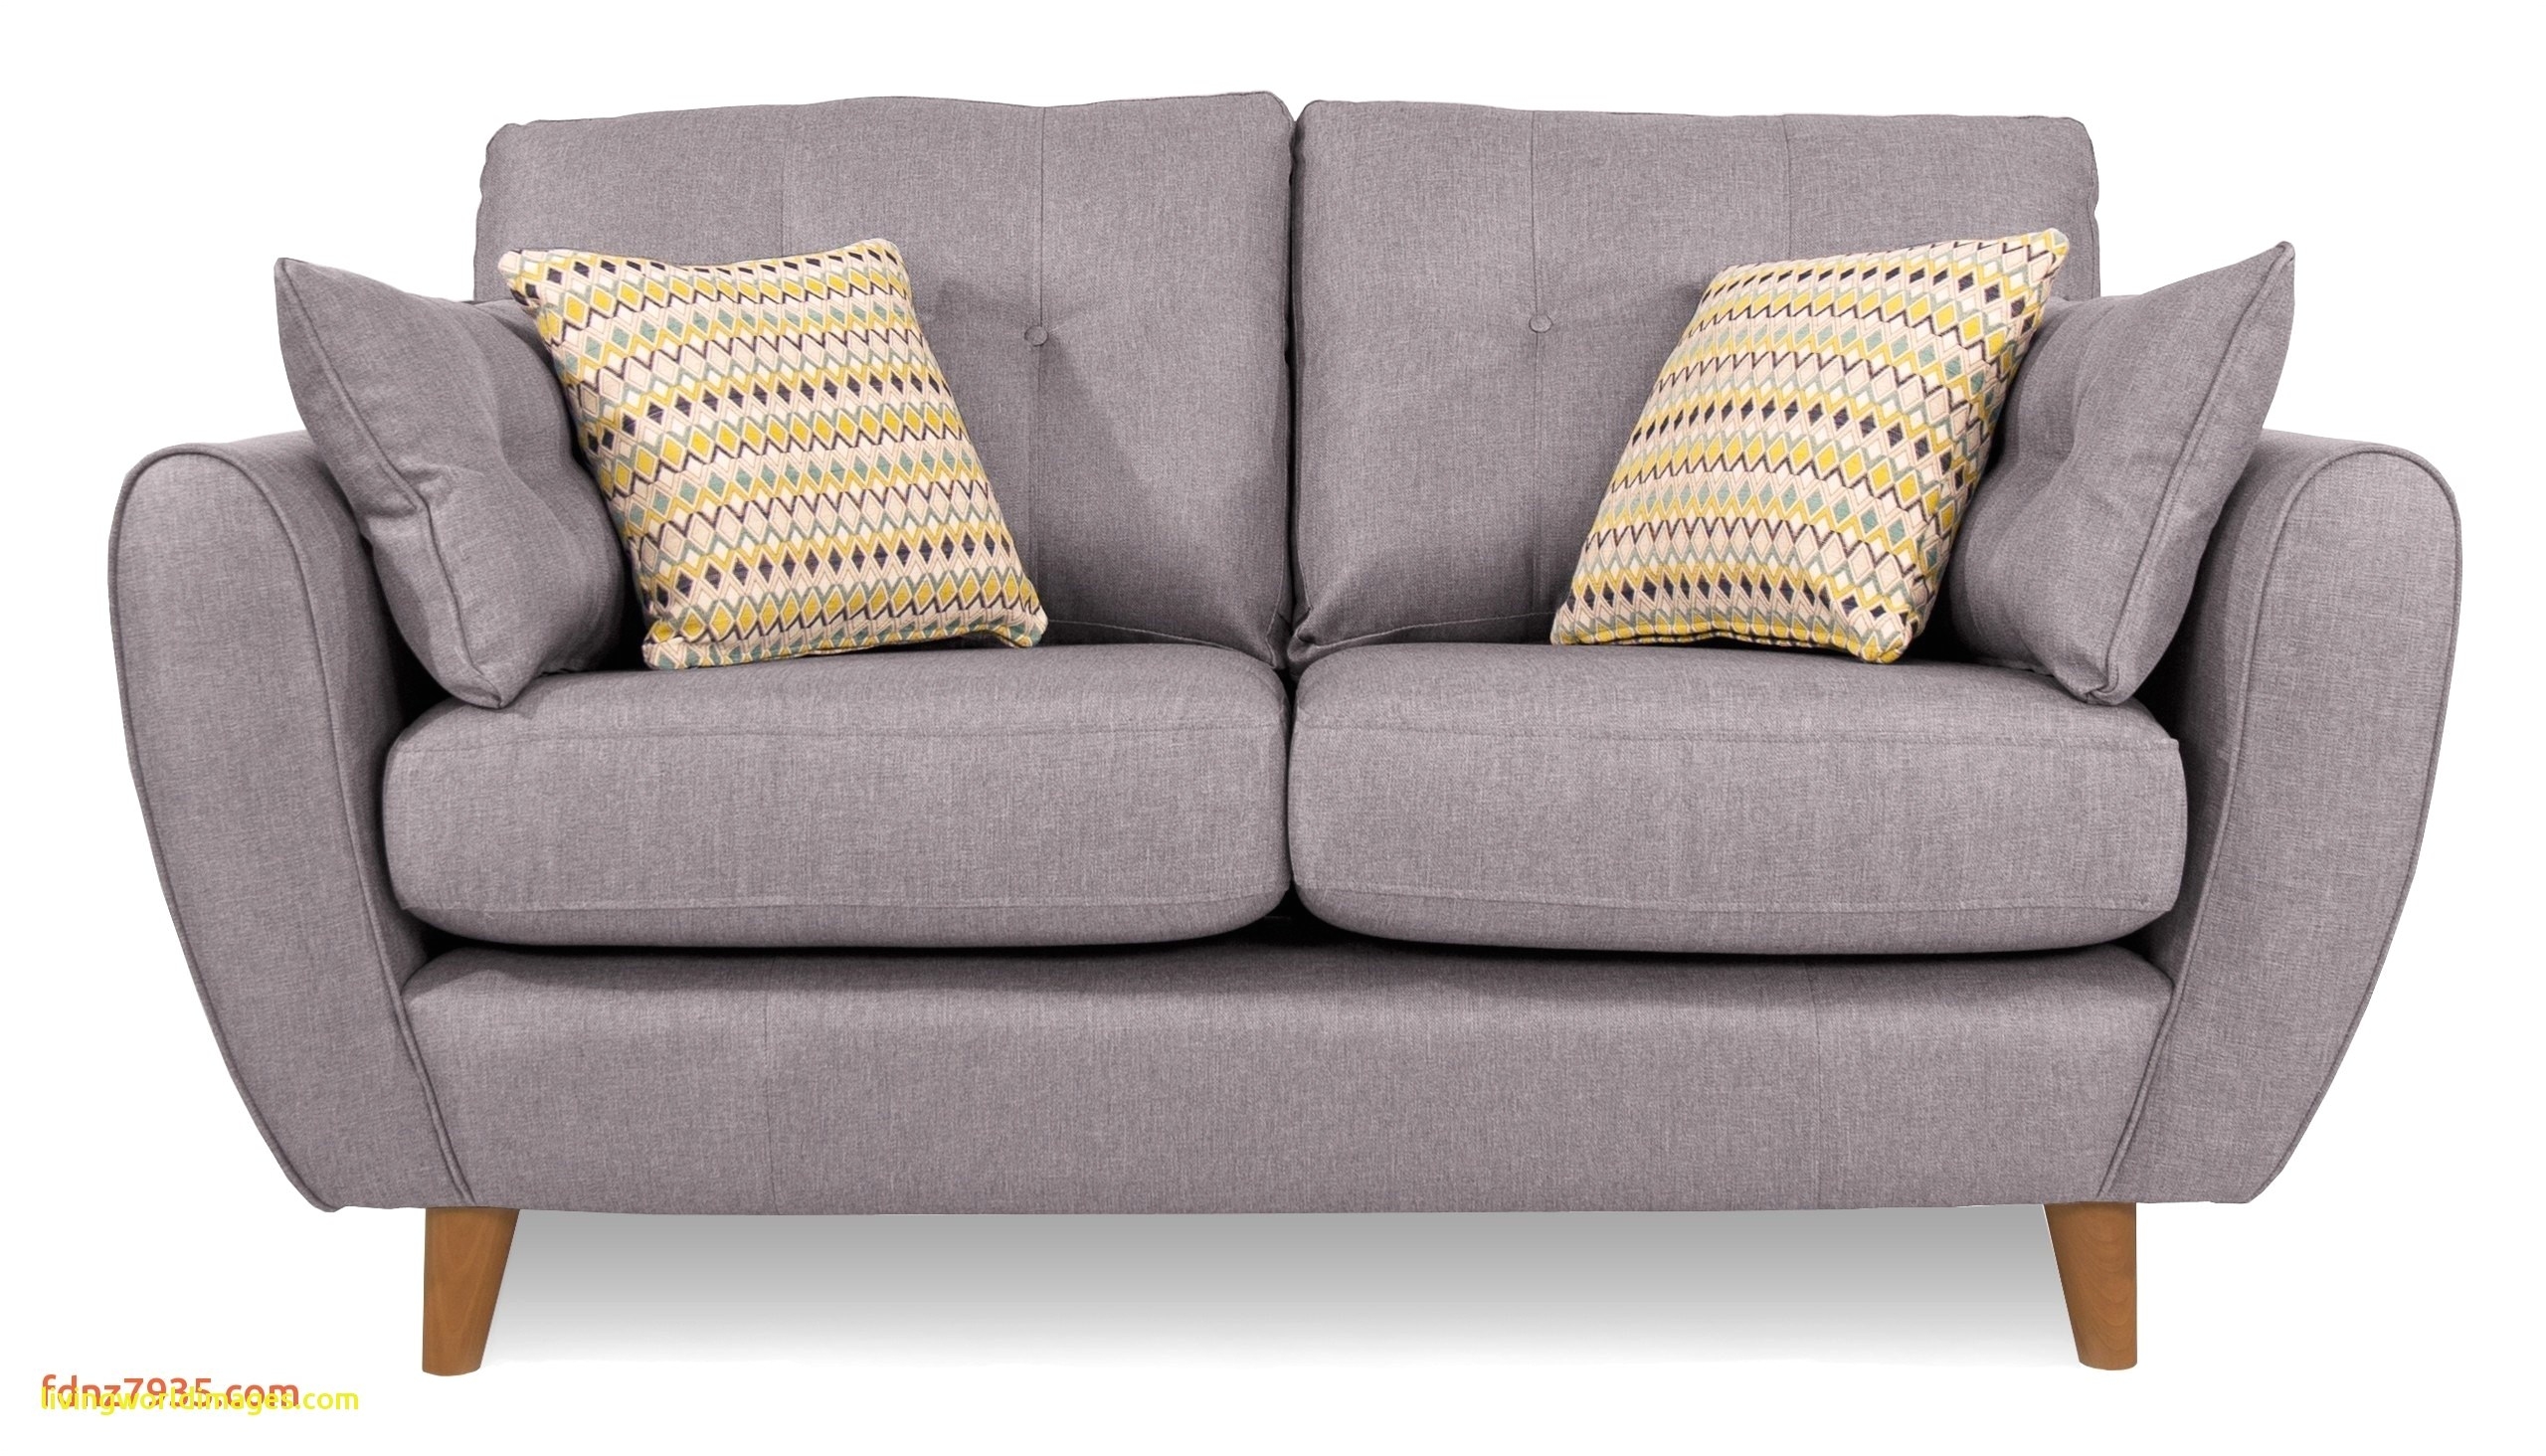 green sleeper sofa awesome couch kinderzimmer auch inspirierend schlafsofa kinderzimmer 0d